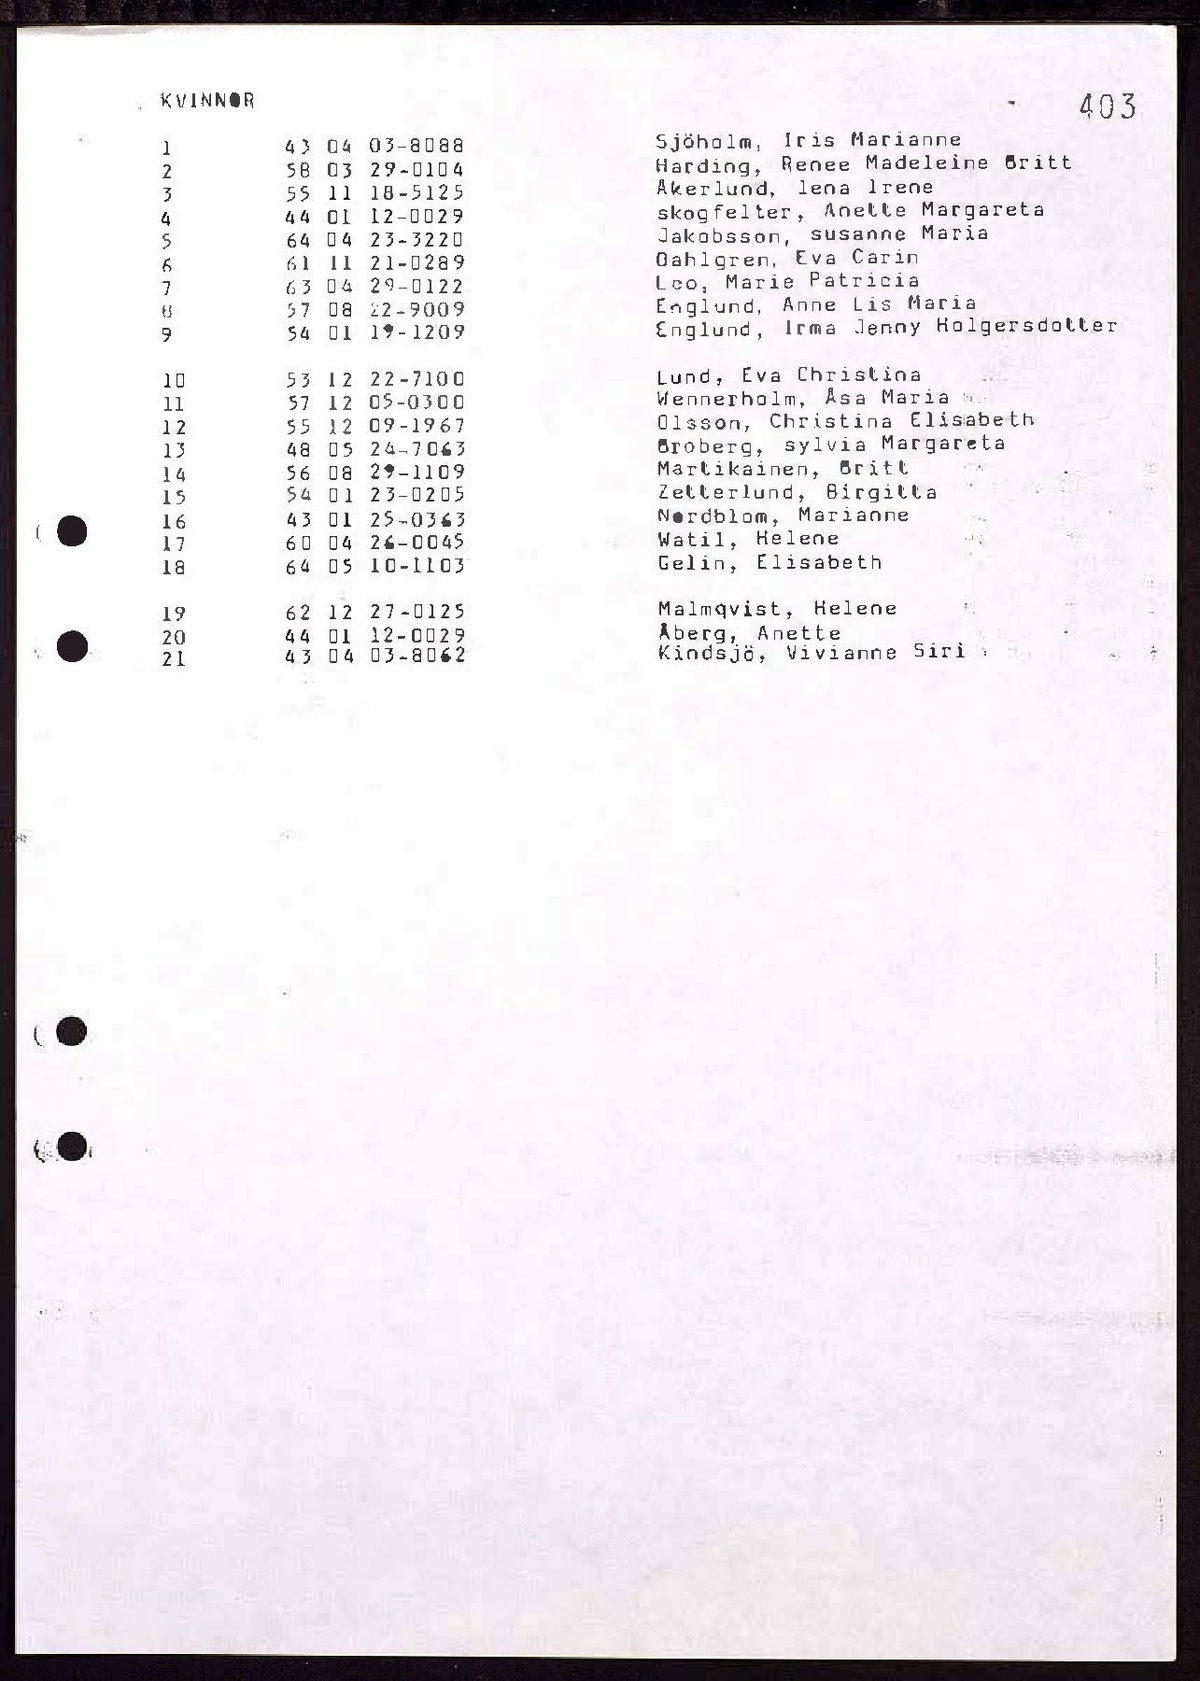 Pol-1989-02-02 KA10918-00-C Kent Lind.pdf